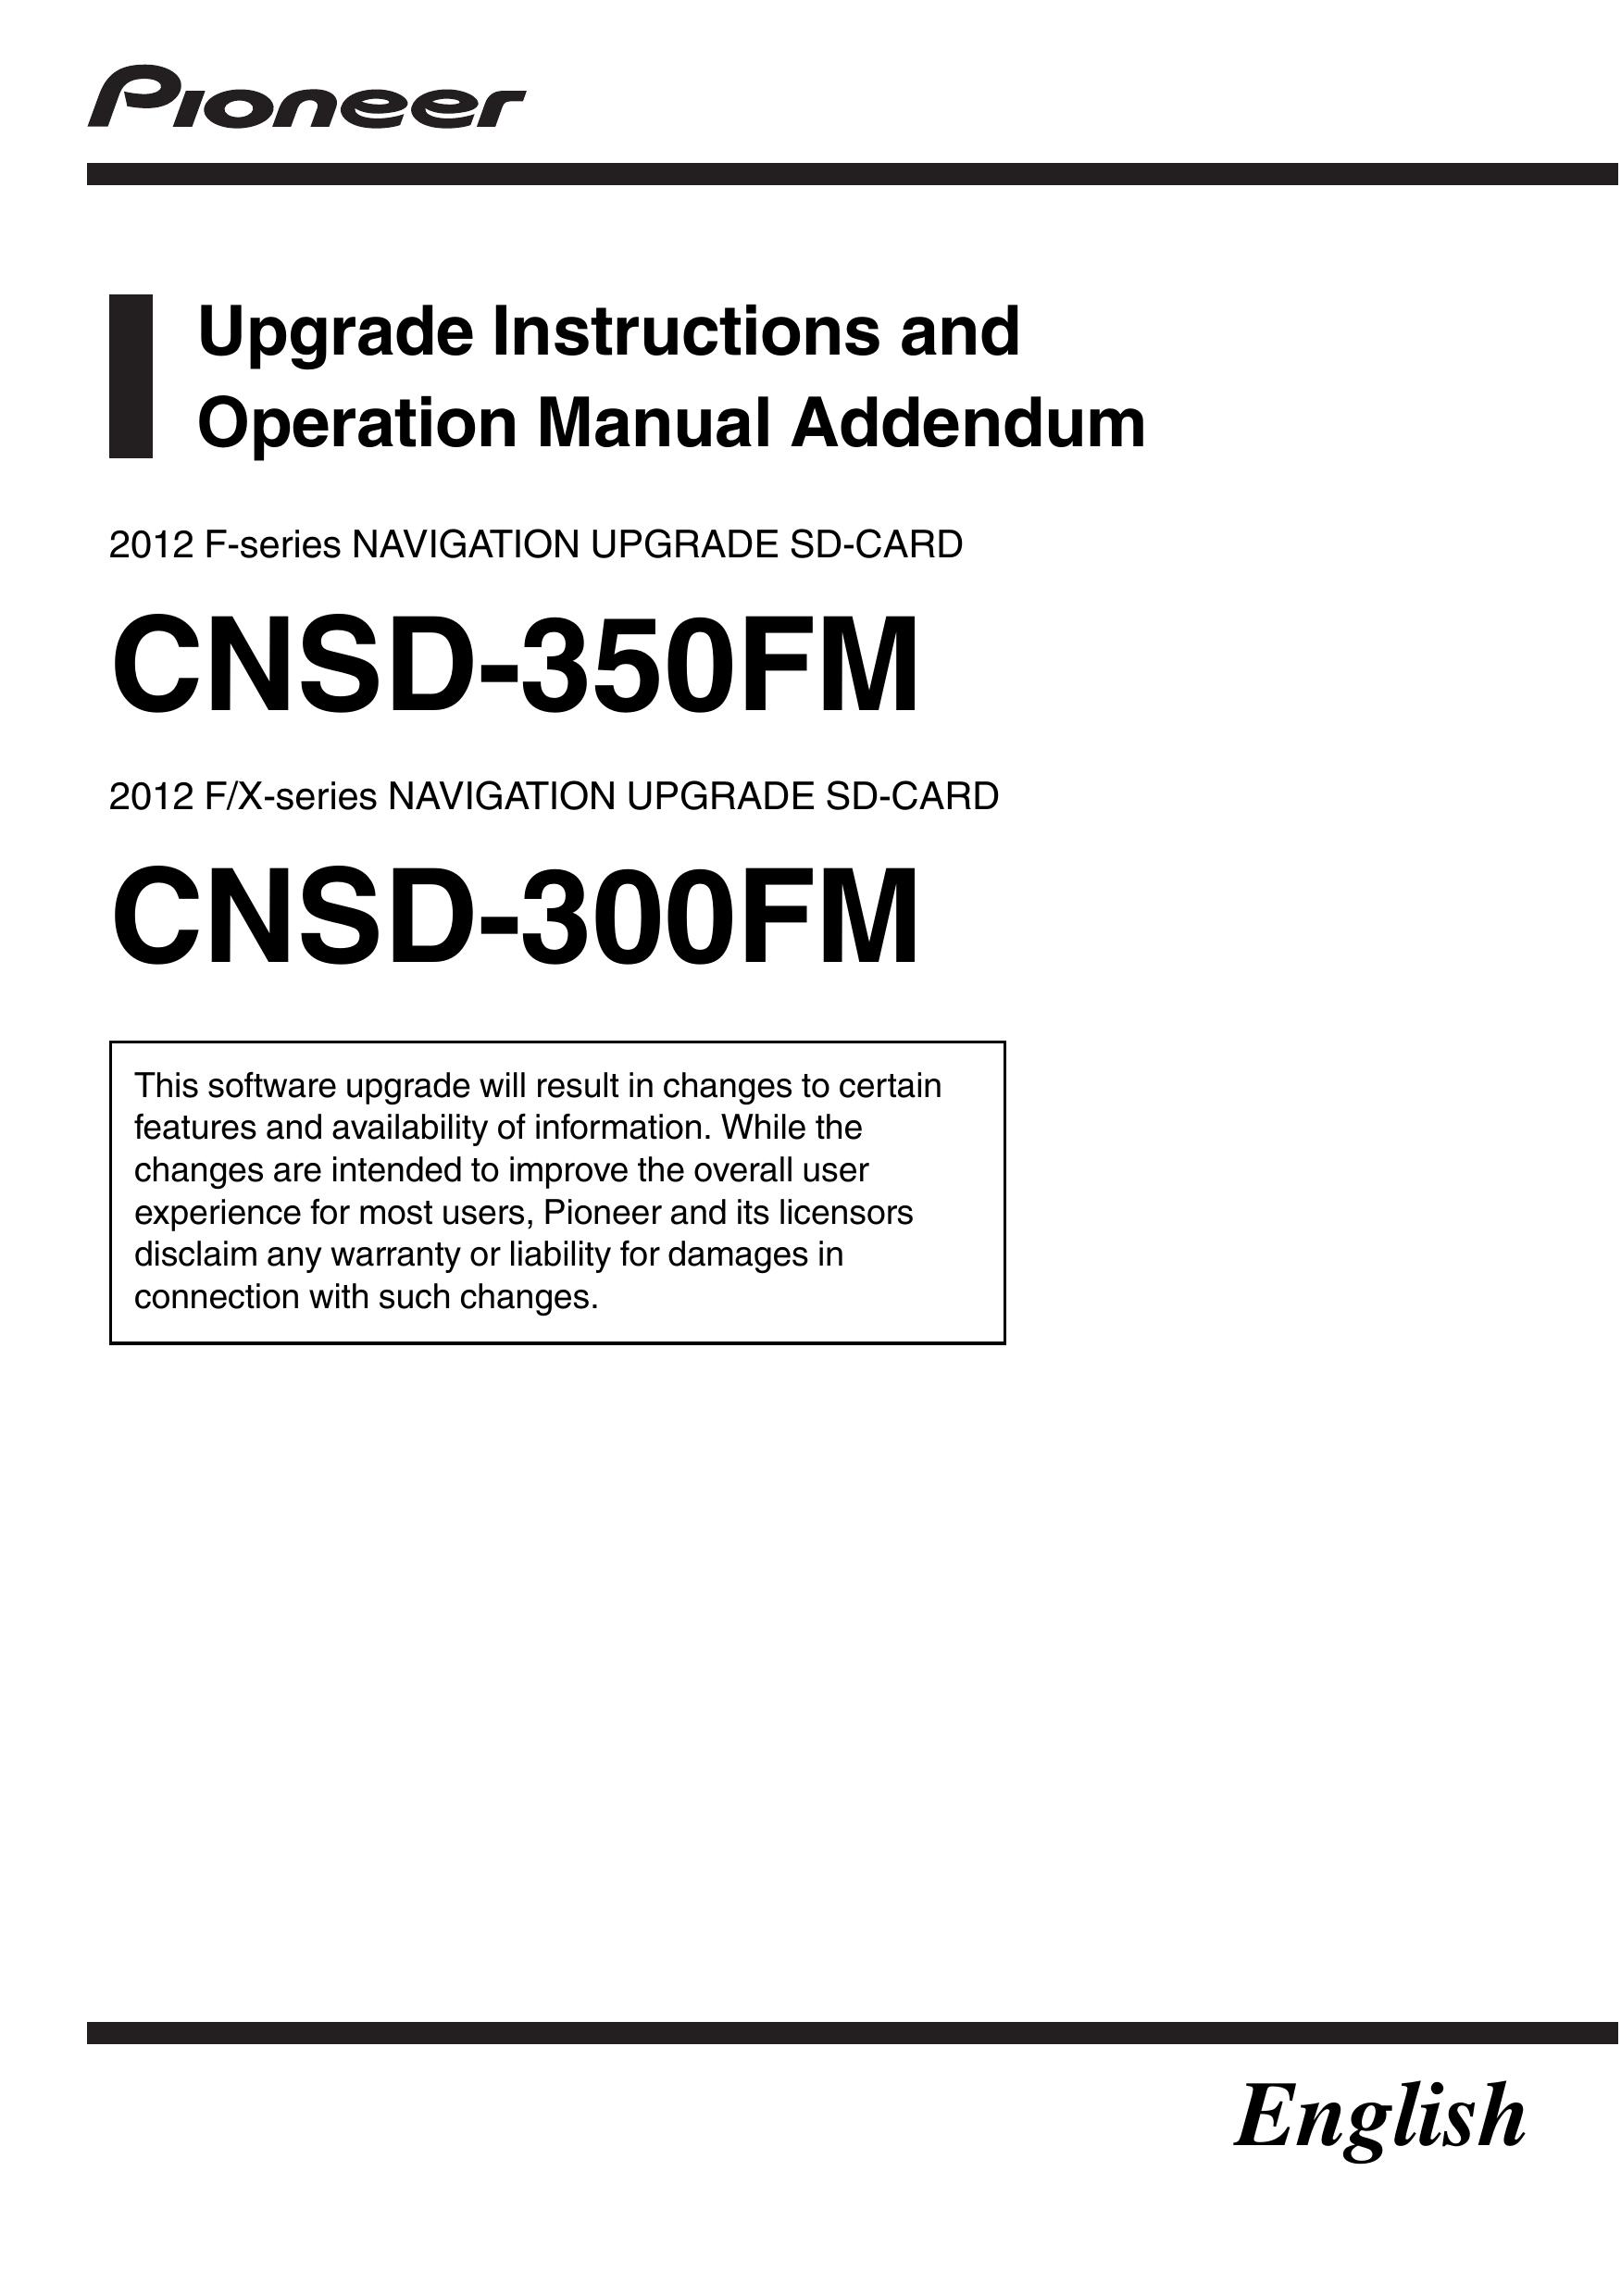 Pioneer CNSD-300FM Camera Accessories User Manual